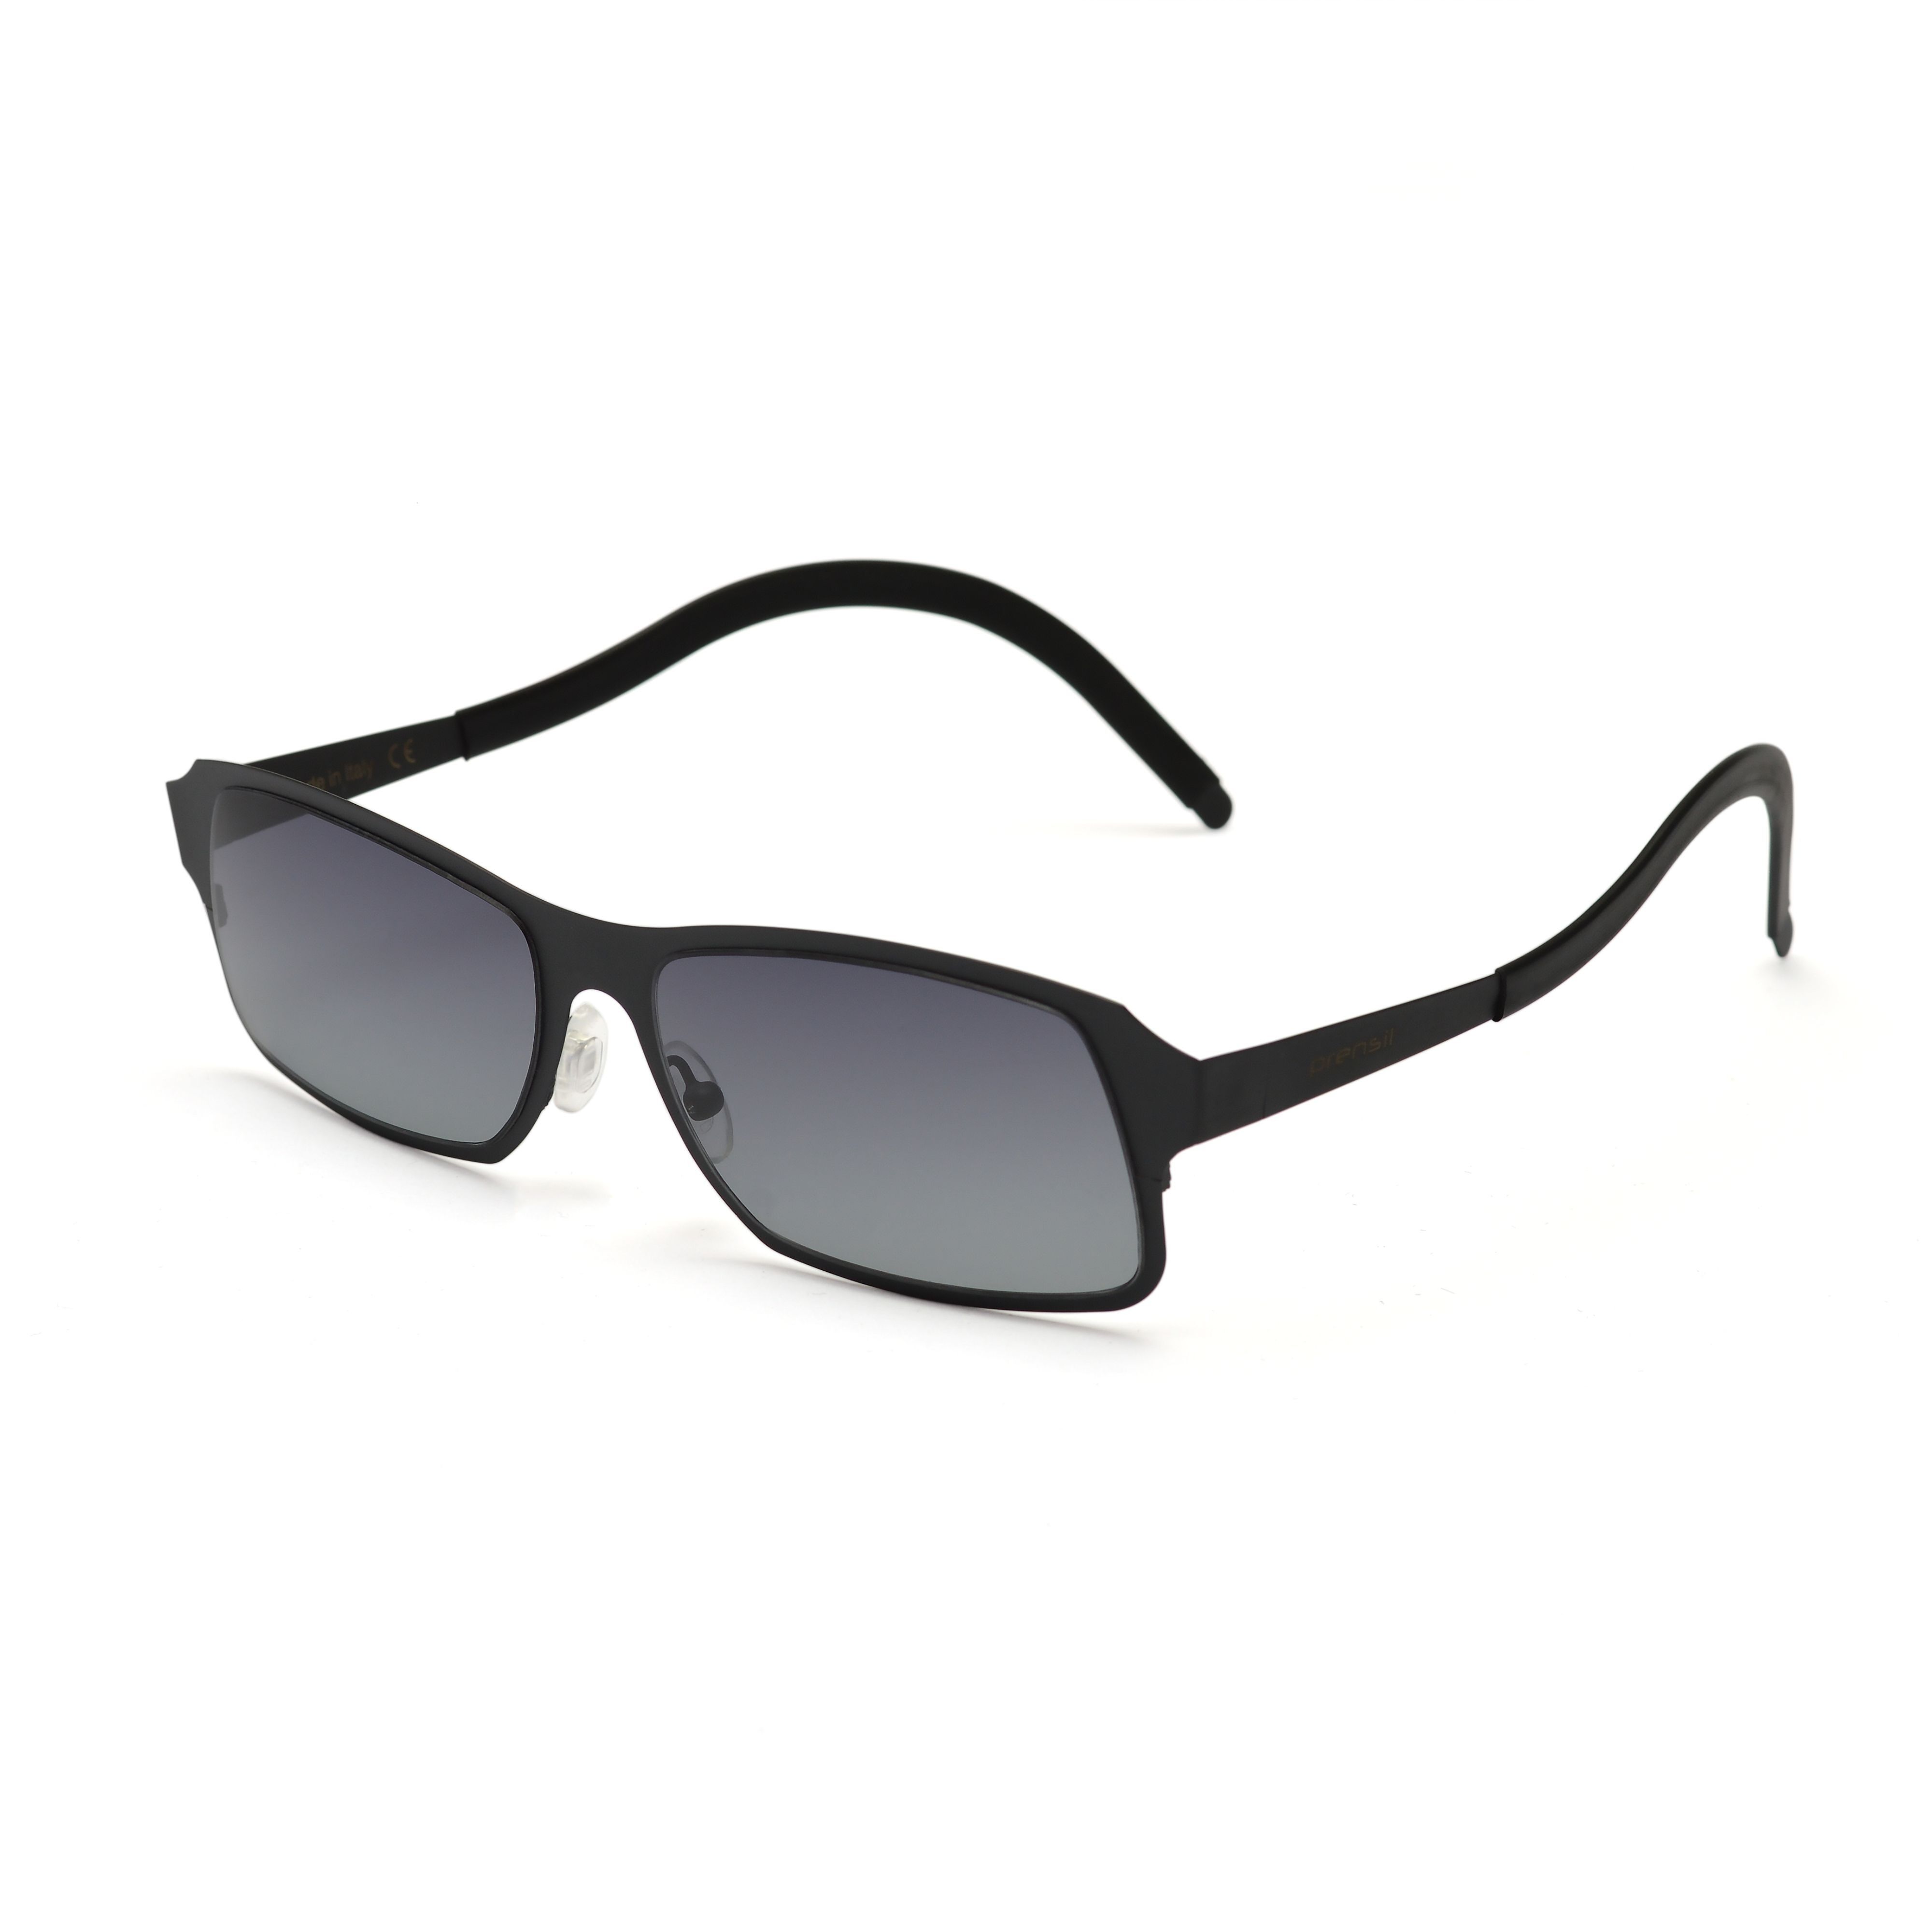 Share 209+ fastrack sunglasses wholesale latest